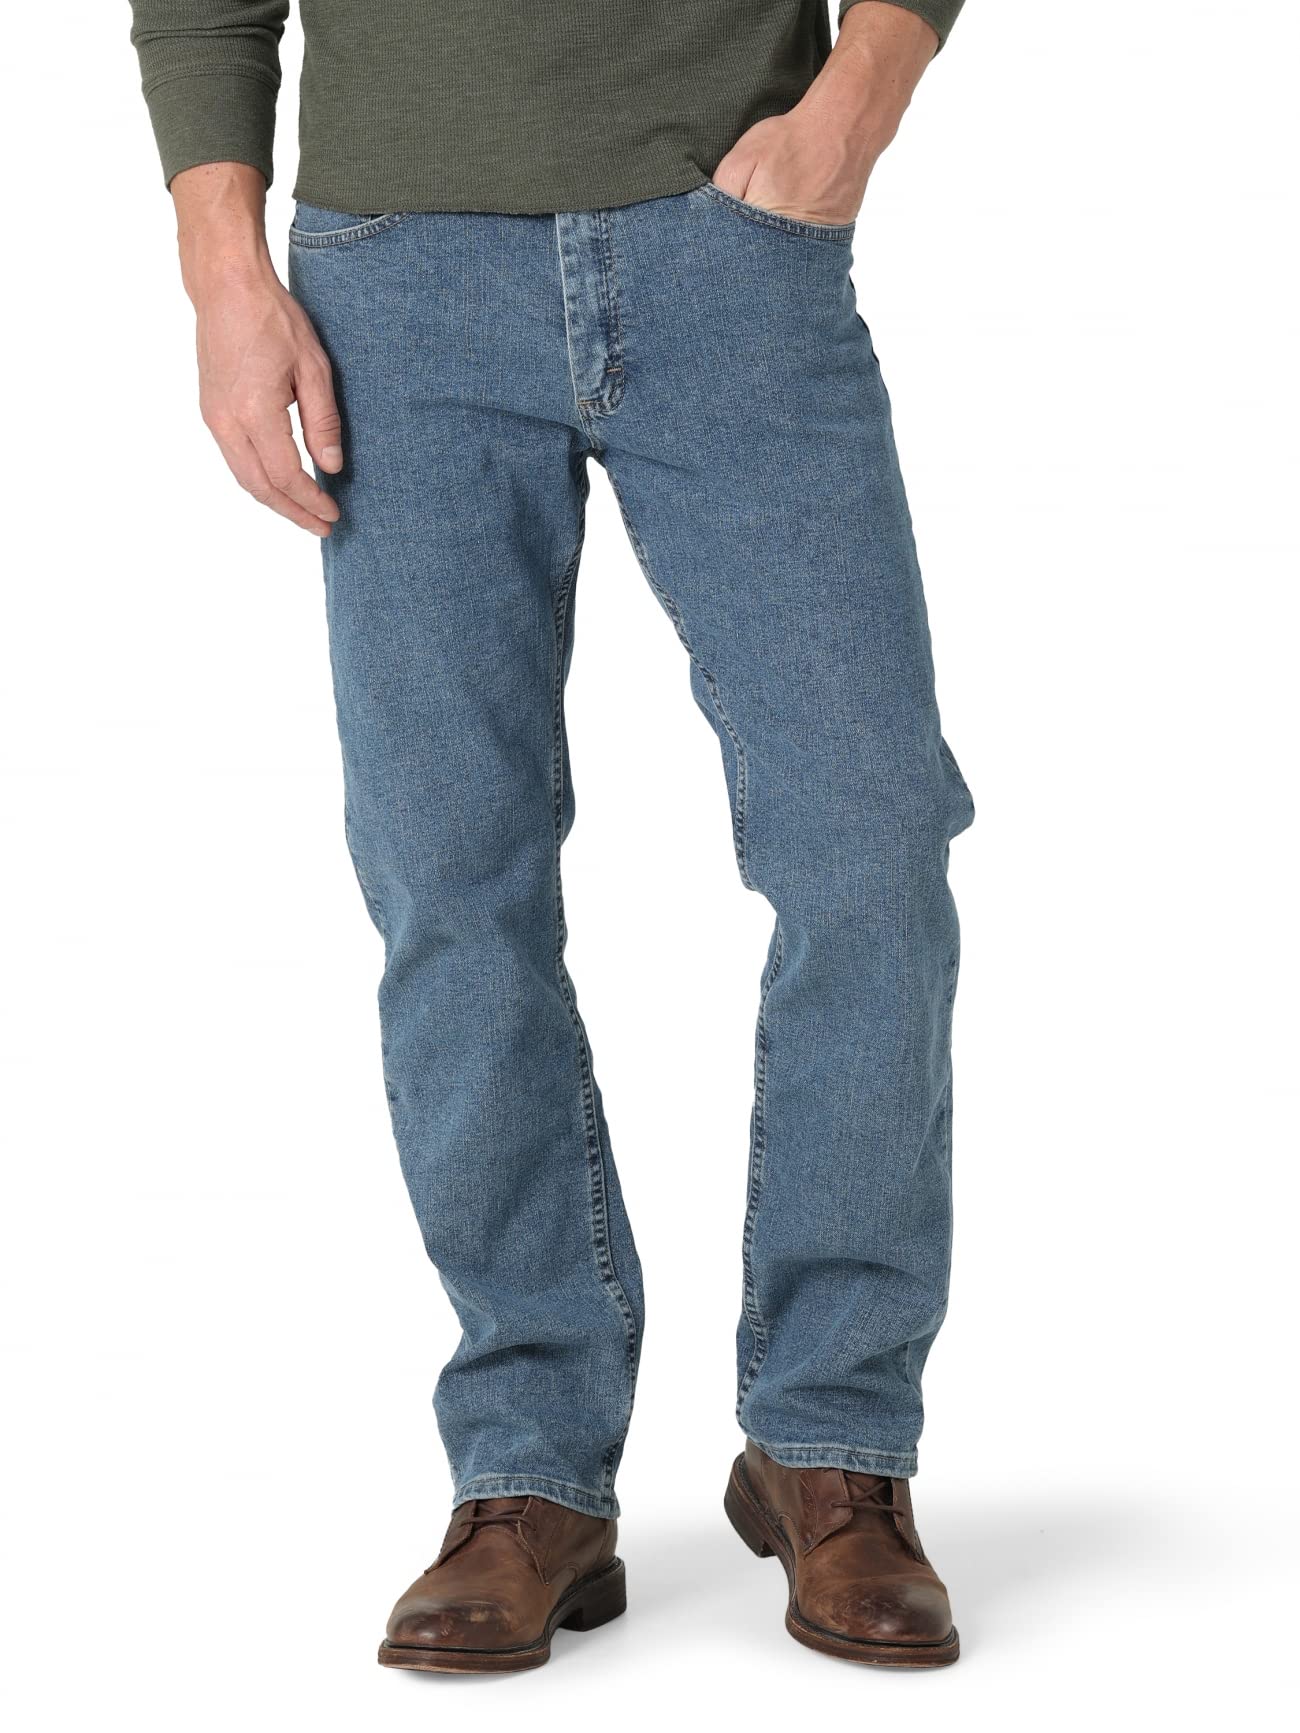 Wrangler Authentics Men's Regular Fit Comfort Flex Waist Jean, Light Stonewash, 30W x 32L